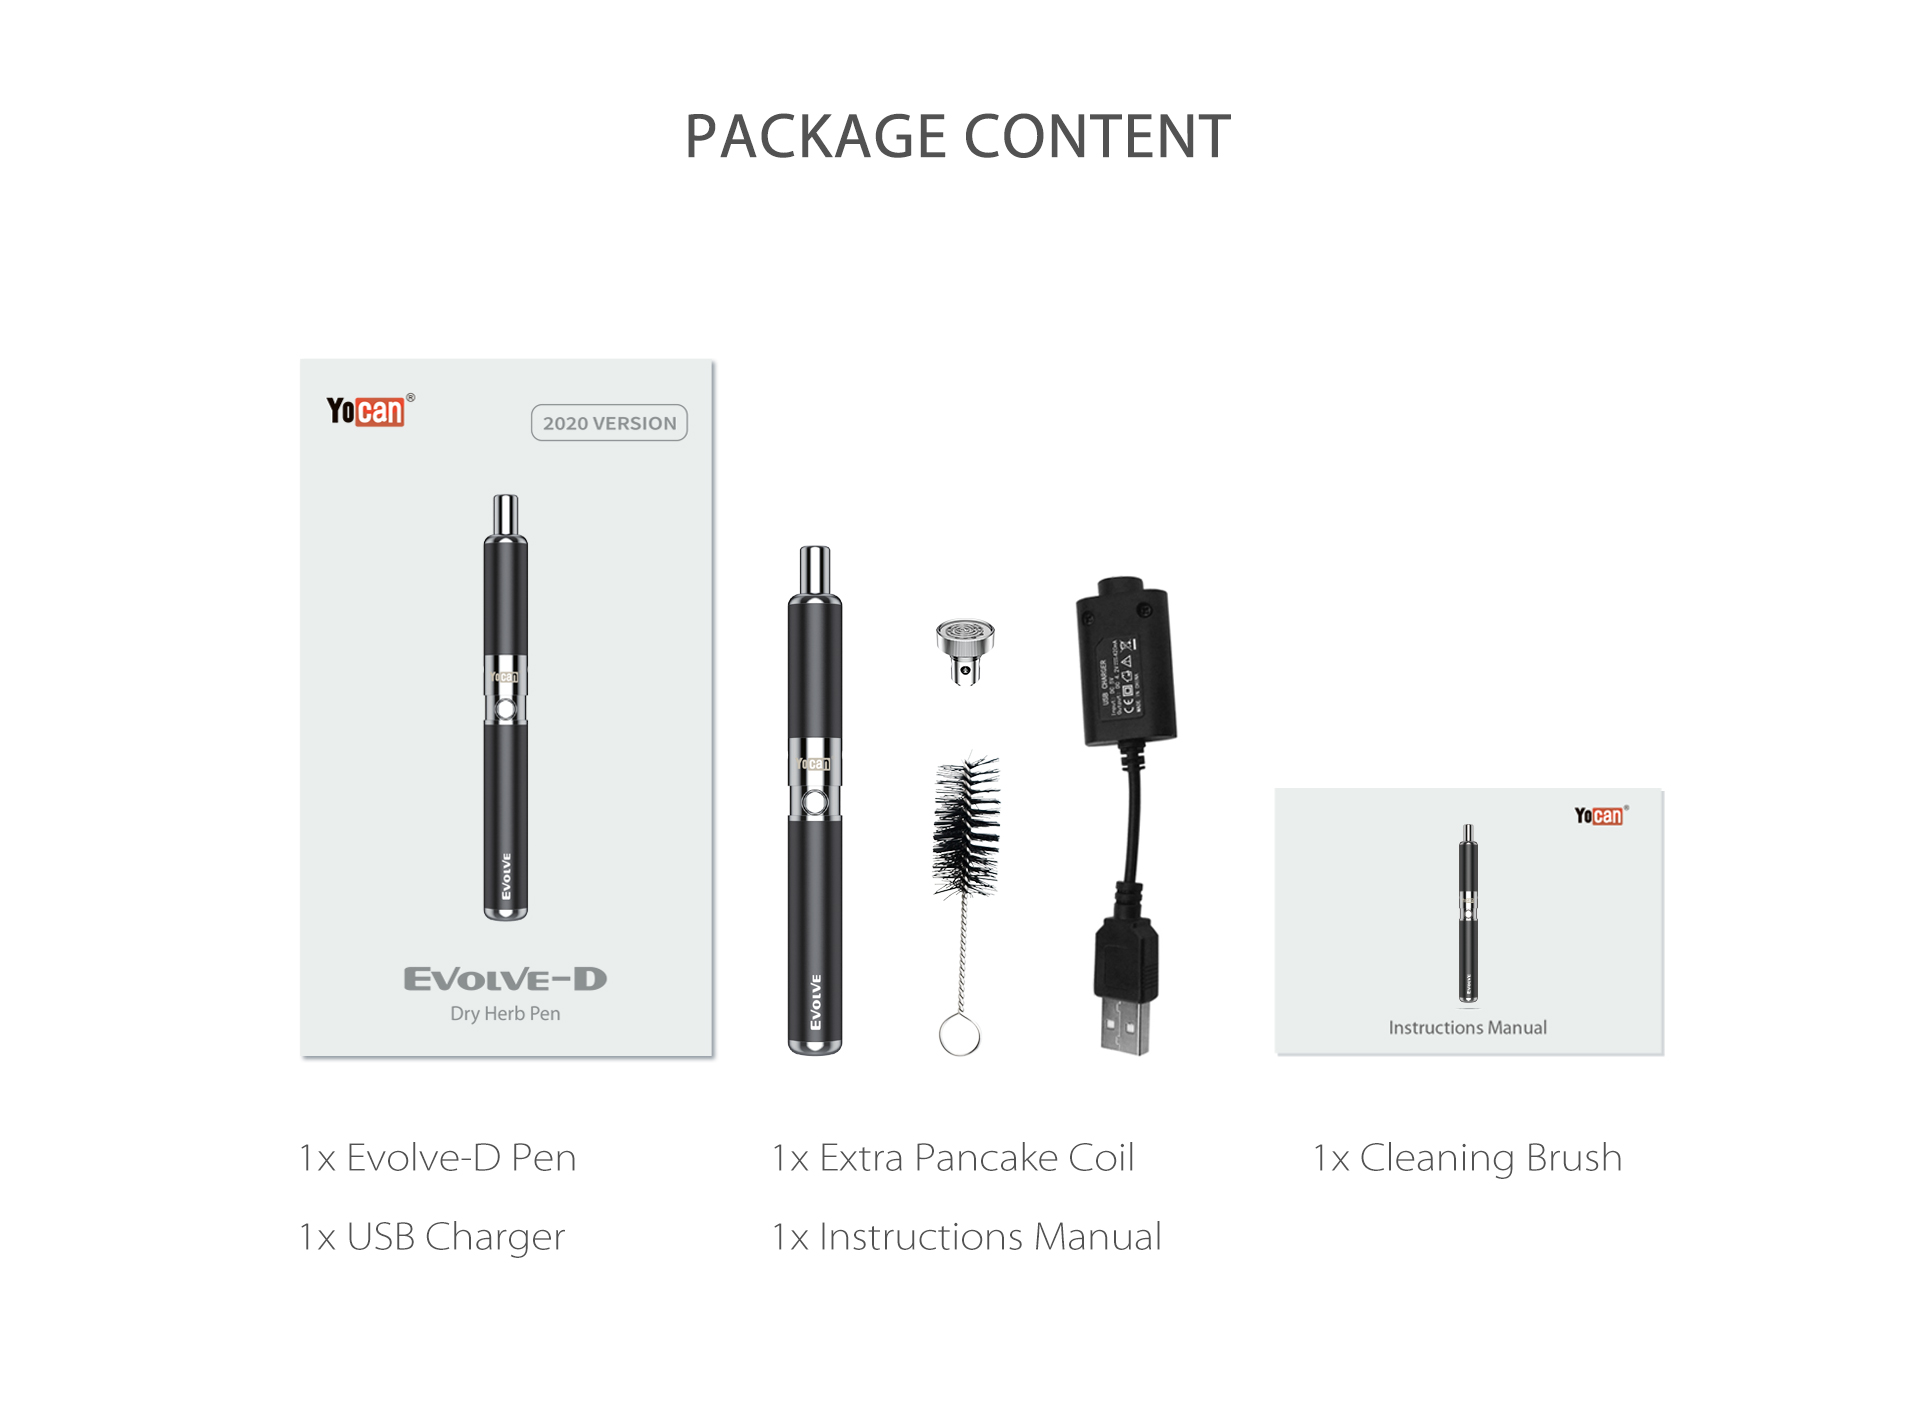 Yocan Evolve-D vaporizer pen 2020 version package content.